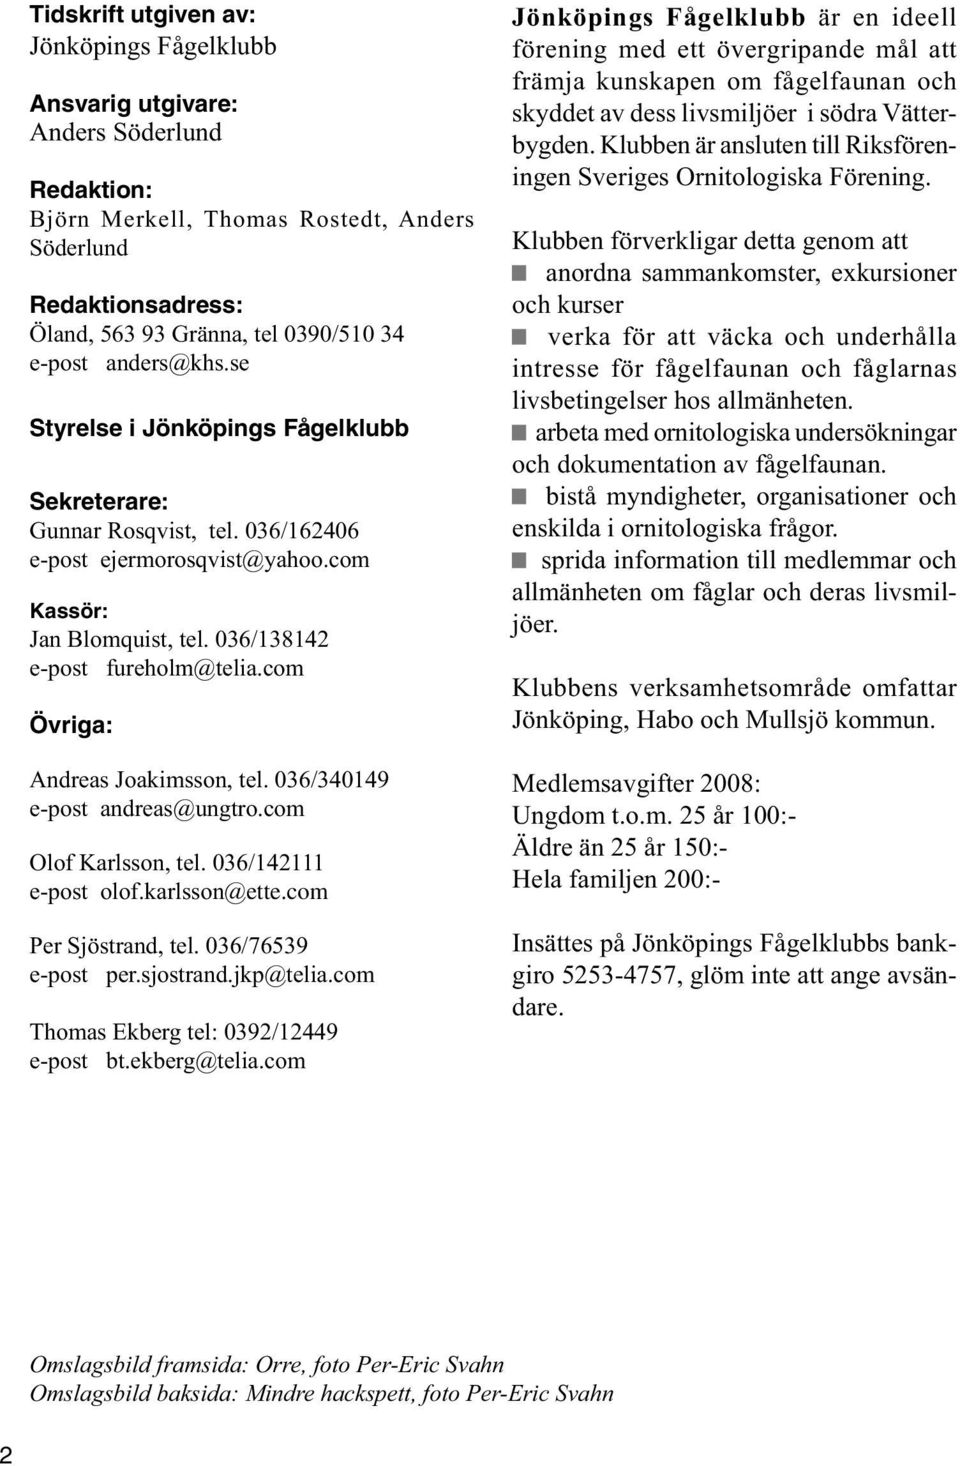 com Övriga: Andreas Joakimsson, tel. 036/340149 e-post andreas@ungtro.com Olof Karlsson, tel. 036/142111 e-post olof.karlsson@ette.com Per Sjöstrand, tel. 036/76539 e-post per.sjostrand.jkp@telia.